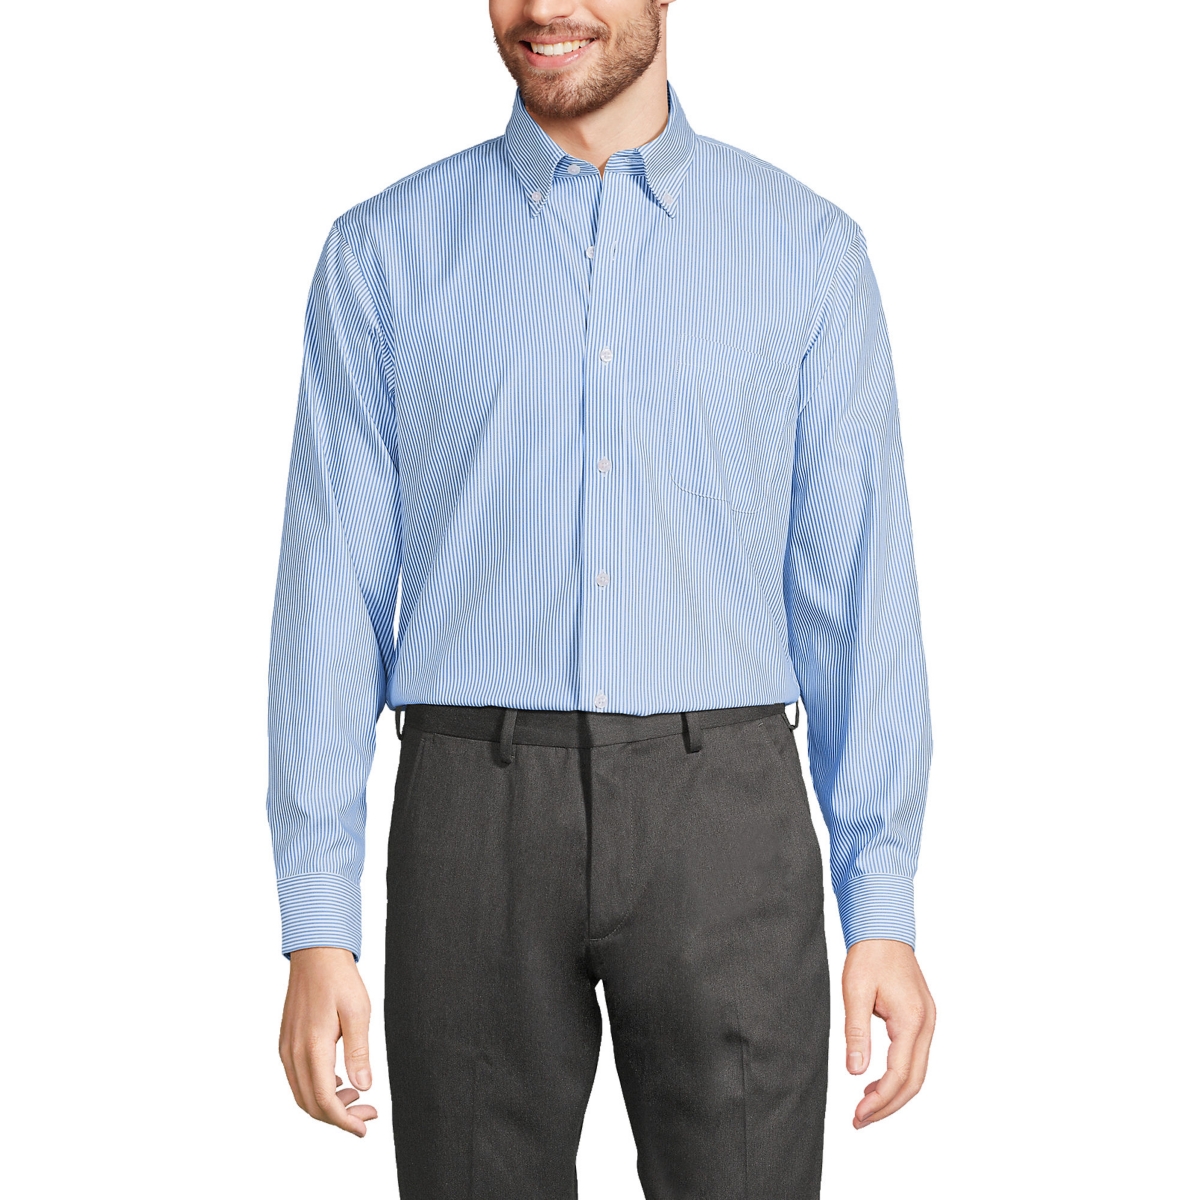 Men's Tailored Fit No Iron Pattern Supima Cotton Pinpoint Buttondown Collar Dress Shirt - Clear blue/white stripe